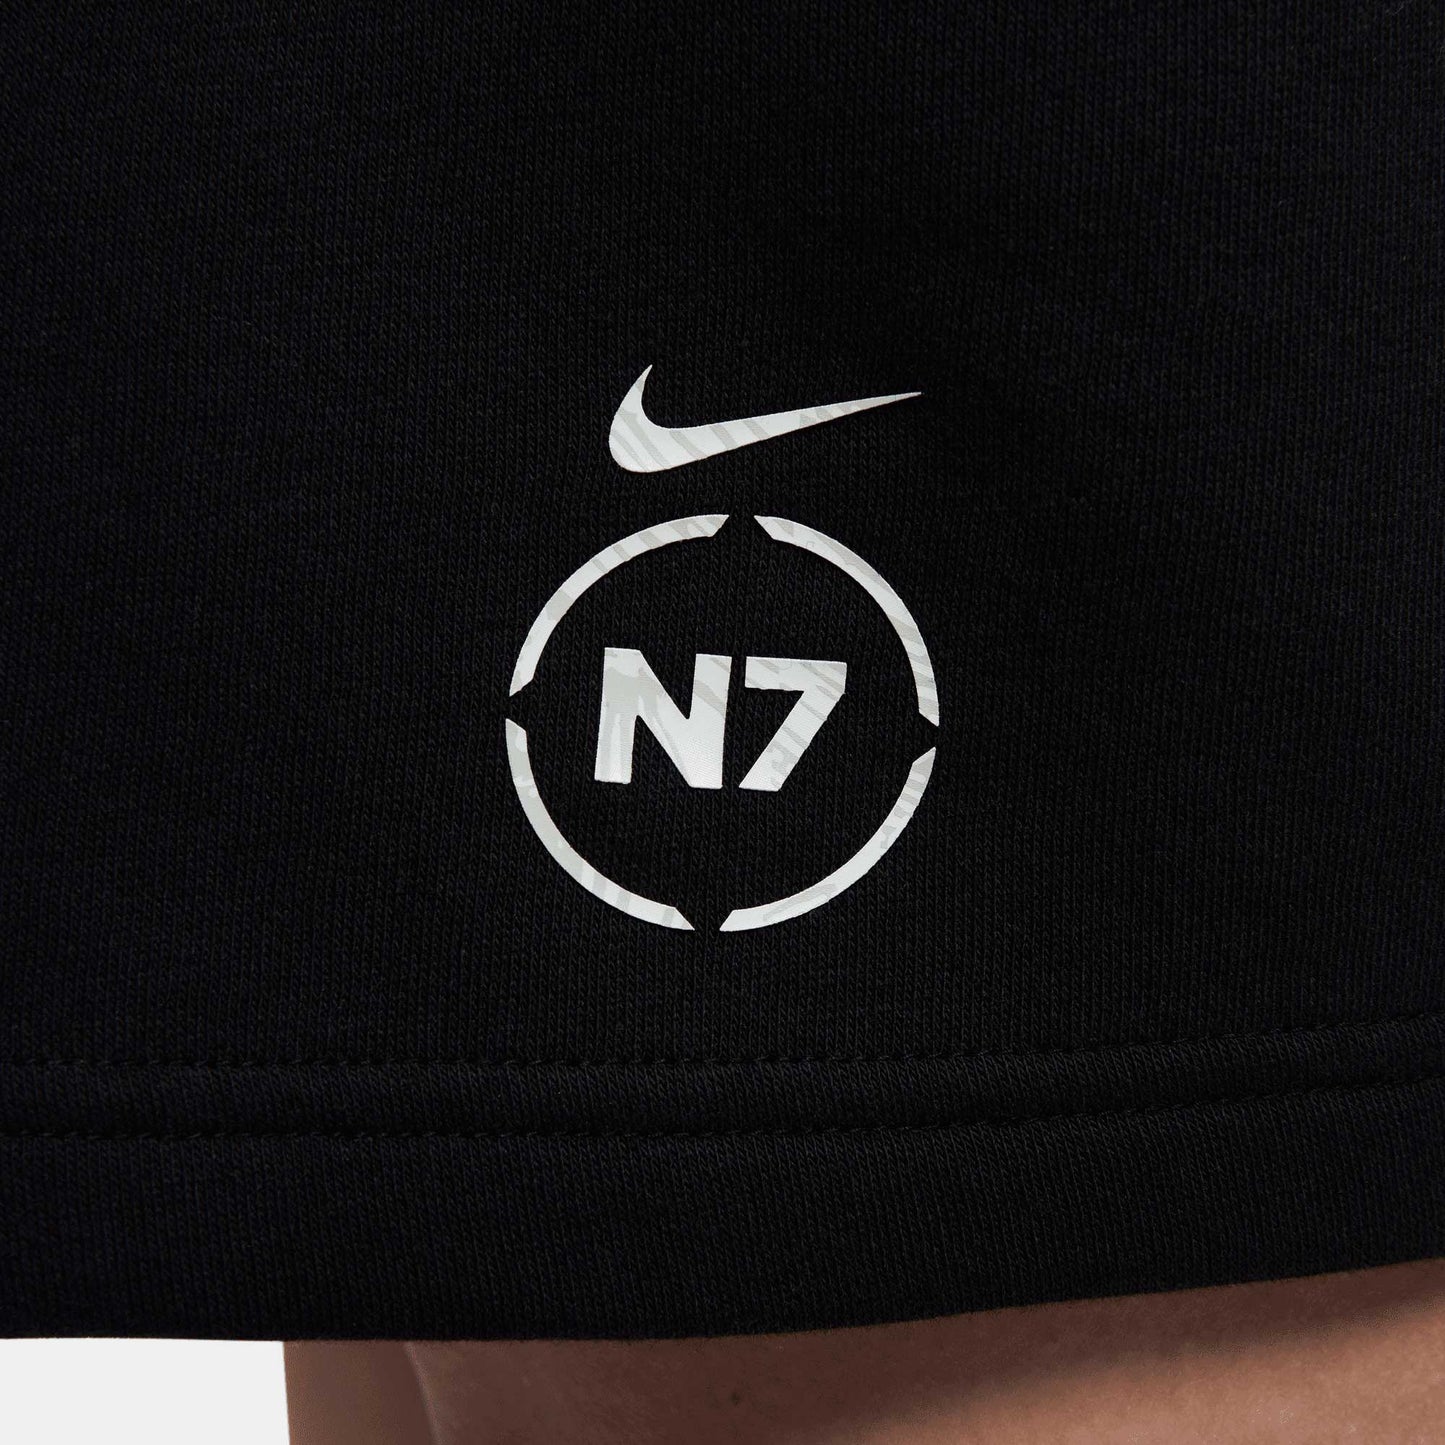 Nike SB N7 Fleece Cargo Shorts, black/university red - Tiki Room Skateboards - 6